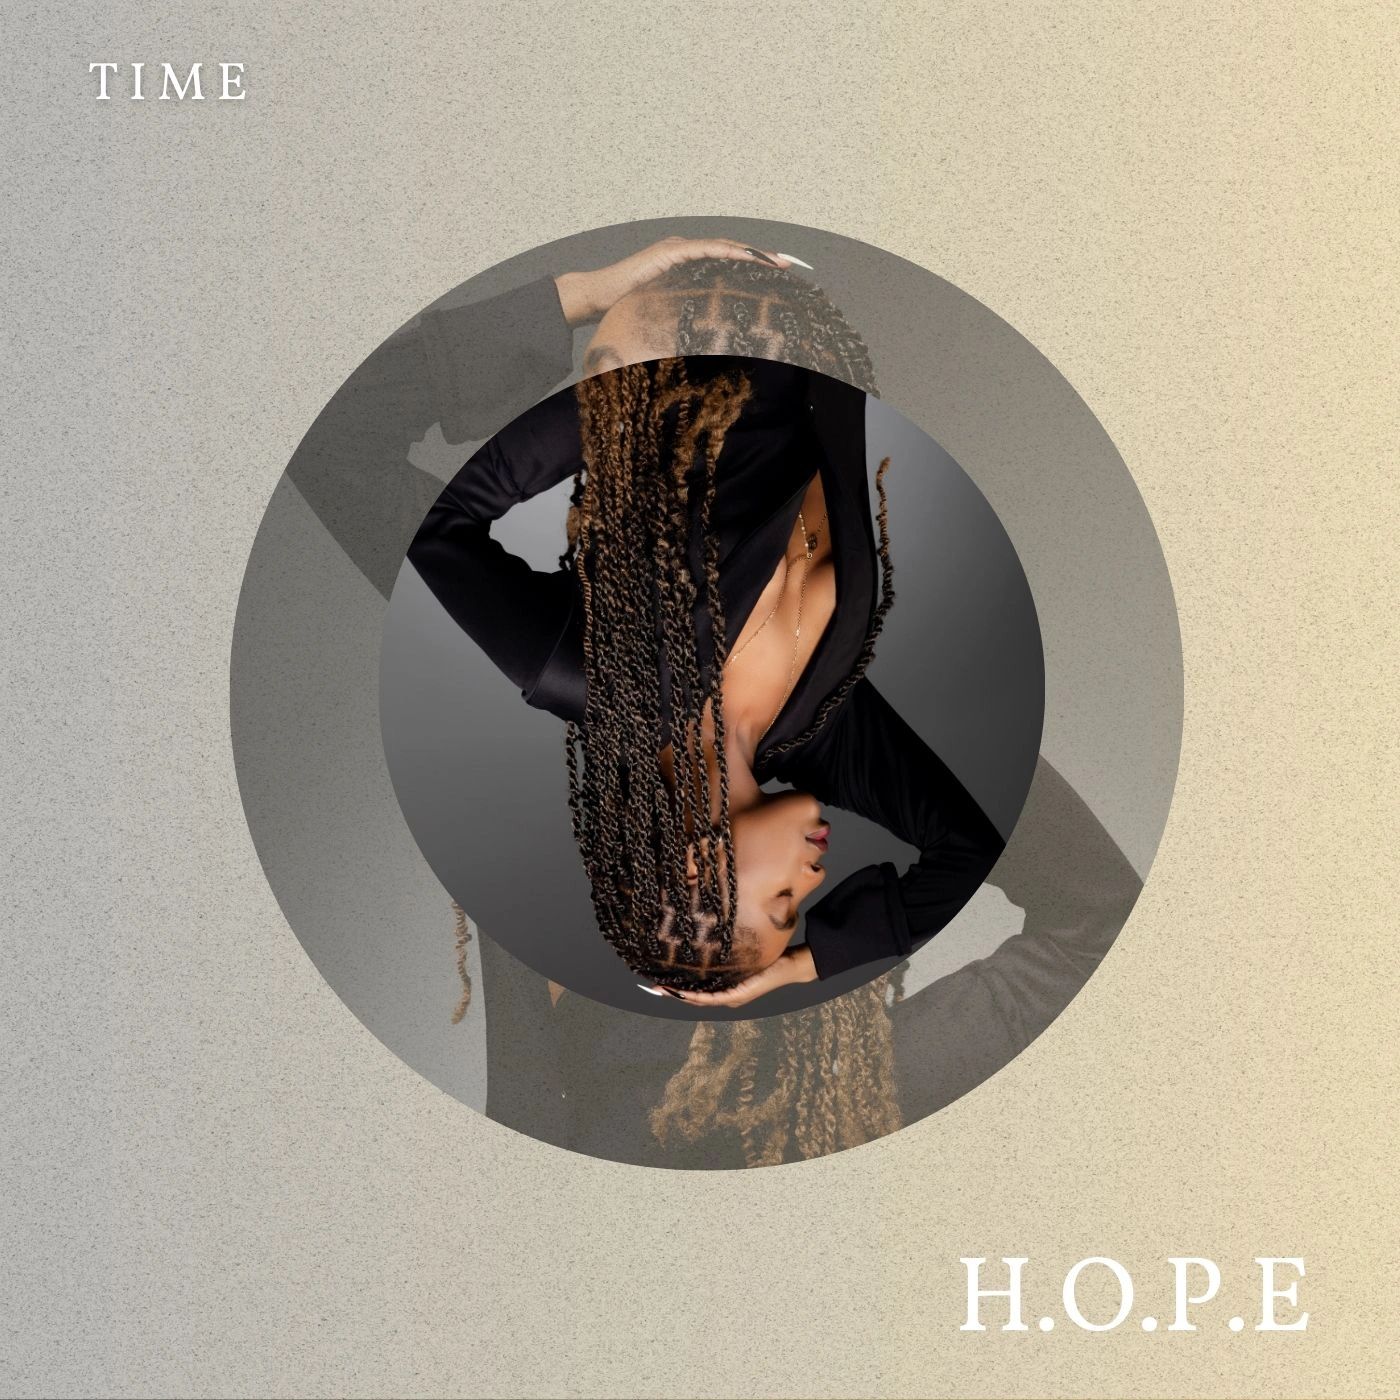 H.O.P.E - Time EP Coming Soon!

hopemusiq.com

#HOPEMUSIQ
#TimeEP